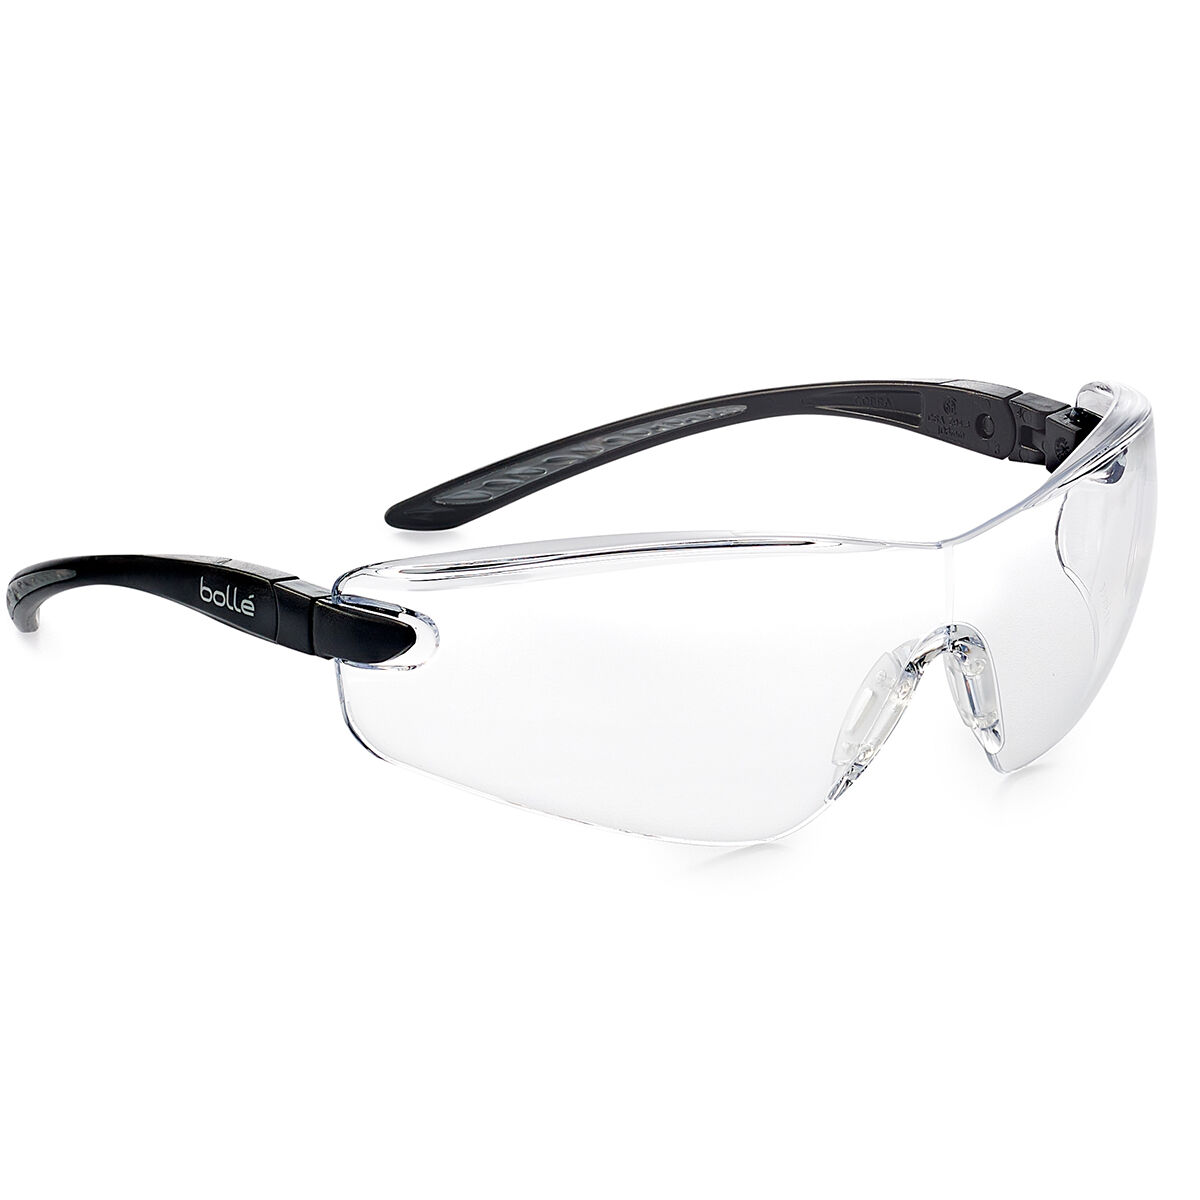 Bollé Schutzbrille Cobra Sonnenbrille Einsatzbrille Schießbrille Schützenbrille 